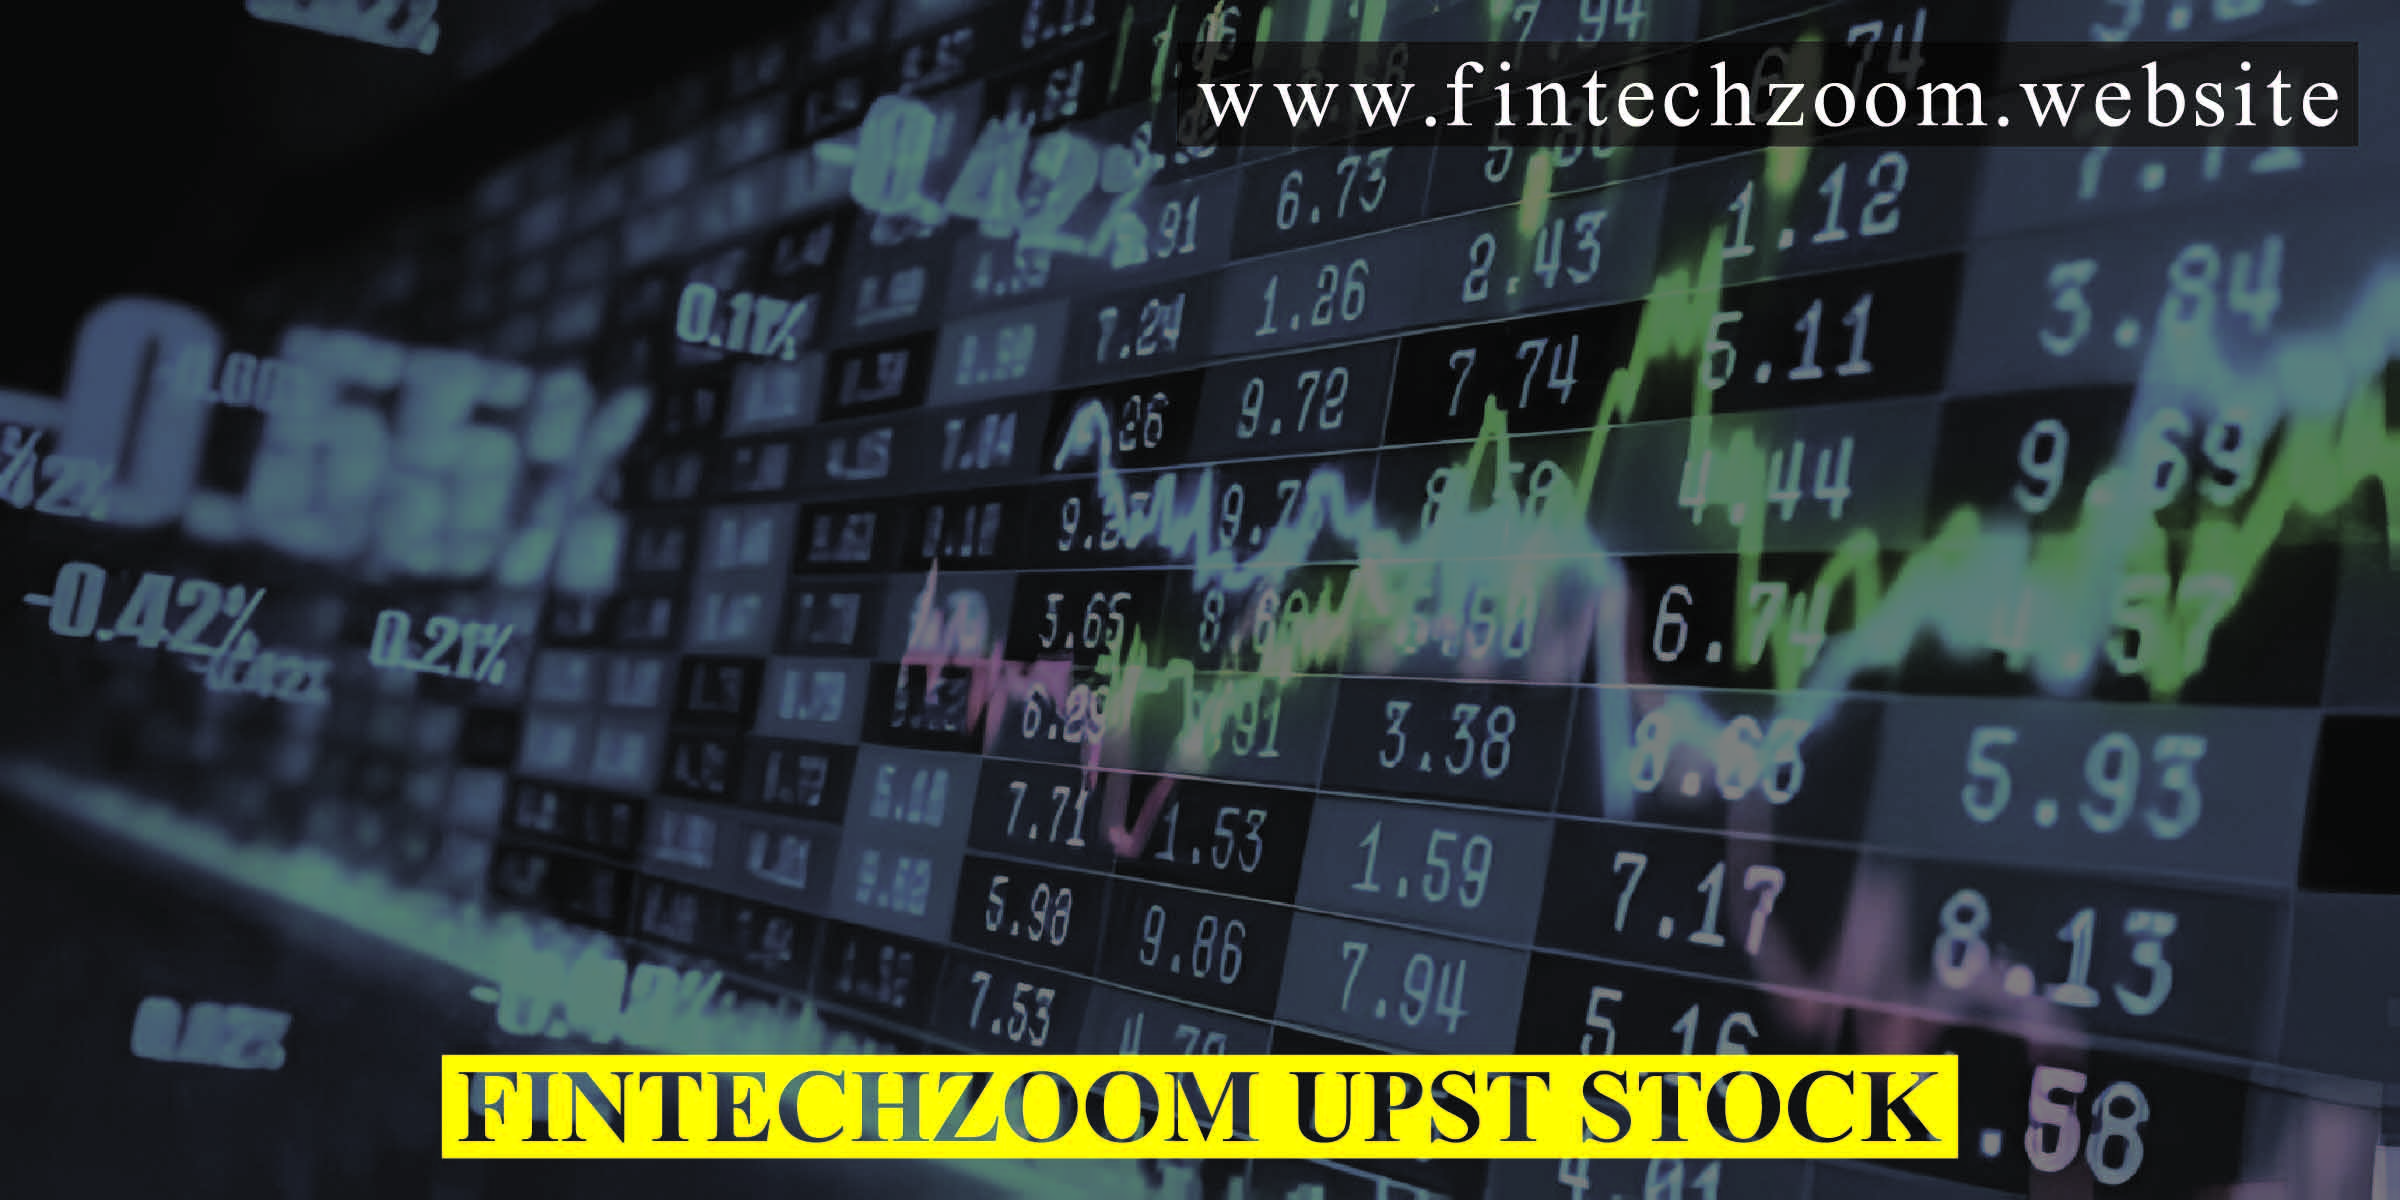 Fintechzoom UPST stock